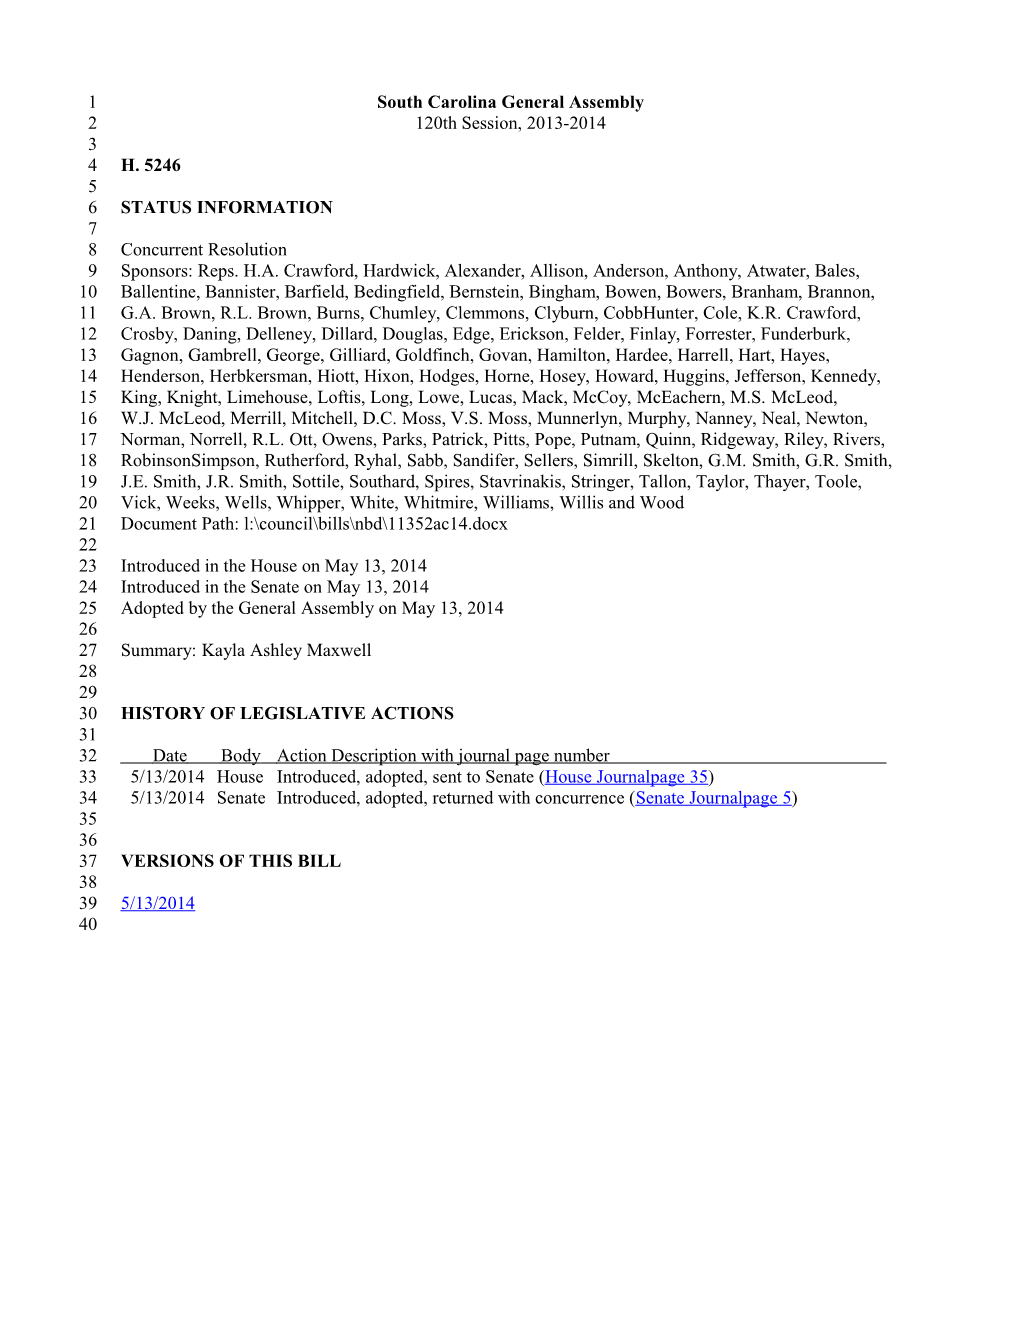 2013-2014 Bill 5246: Kayla Ashley Maxwell - South Carolina Legislature Online